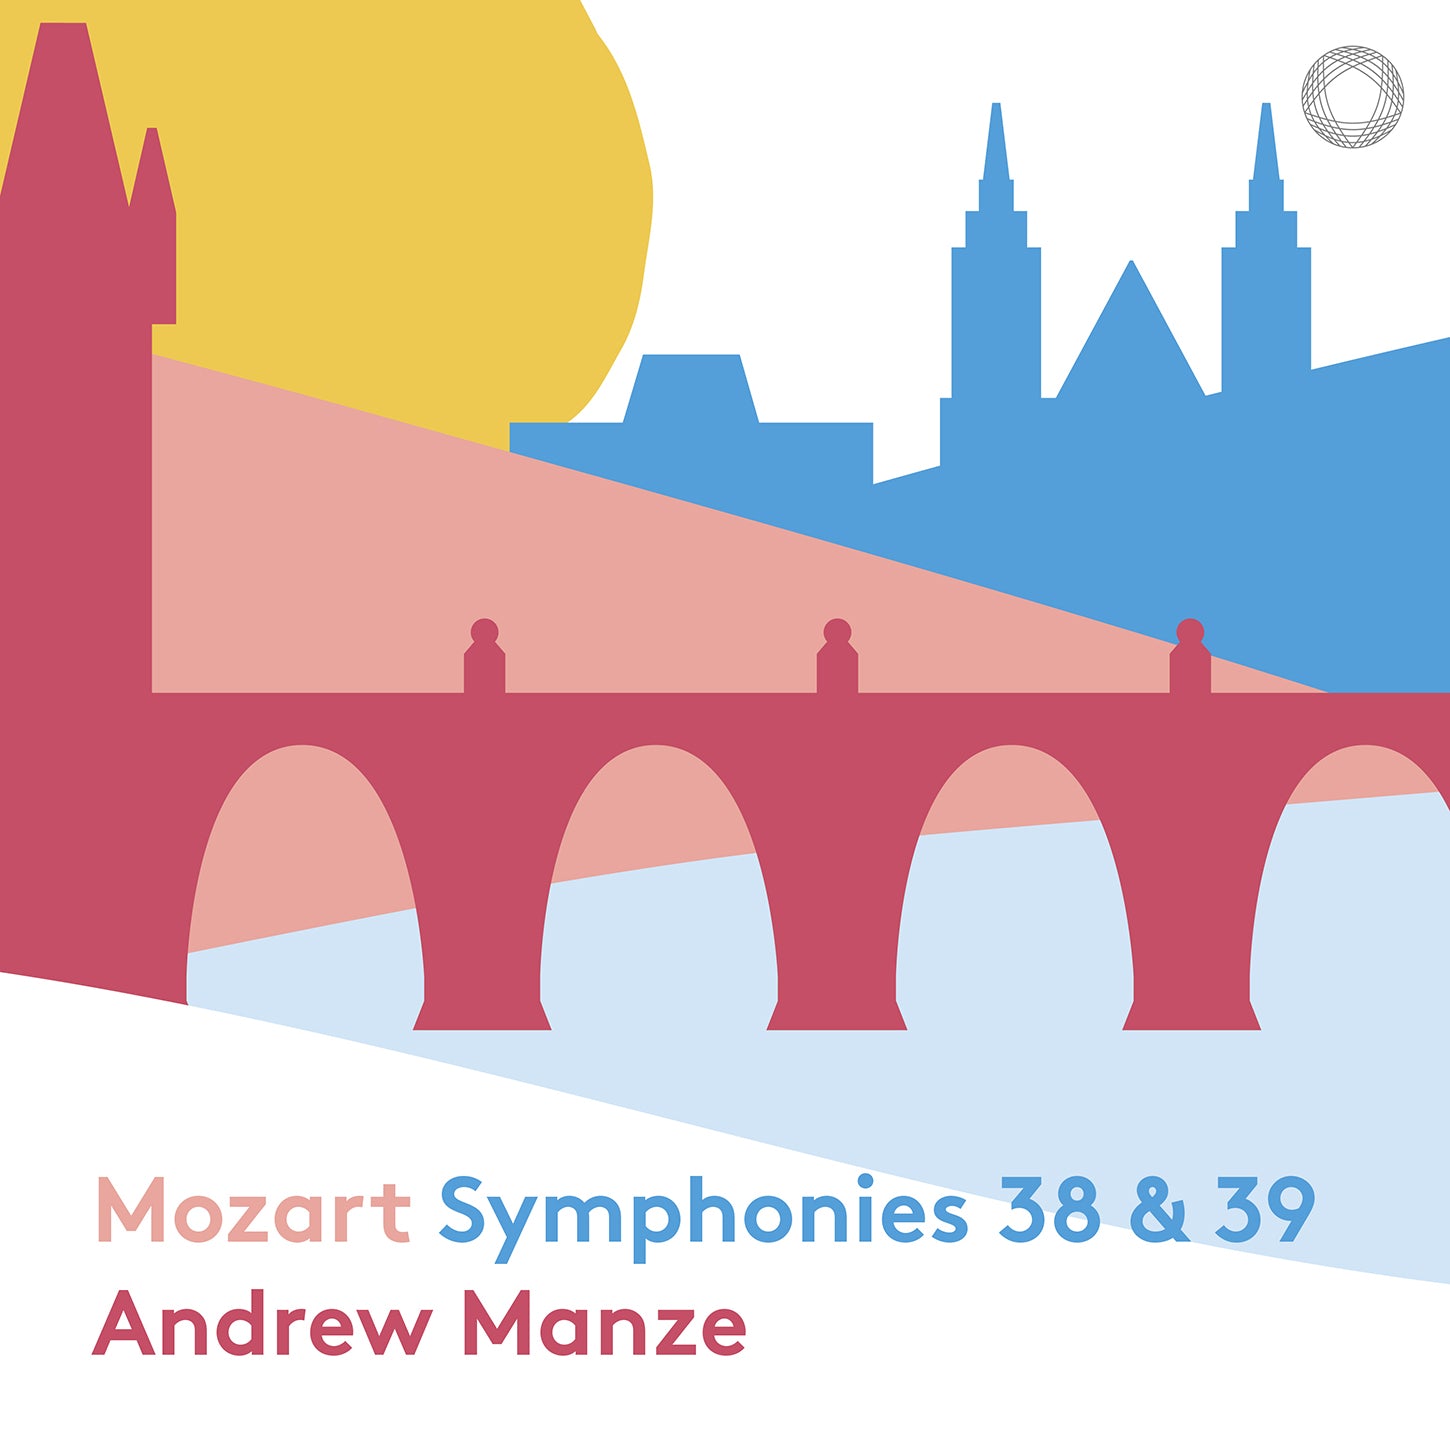 Mozart: Symphonies Nos. 38 & 39 / Manze, NDR Radiophilharmonie